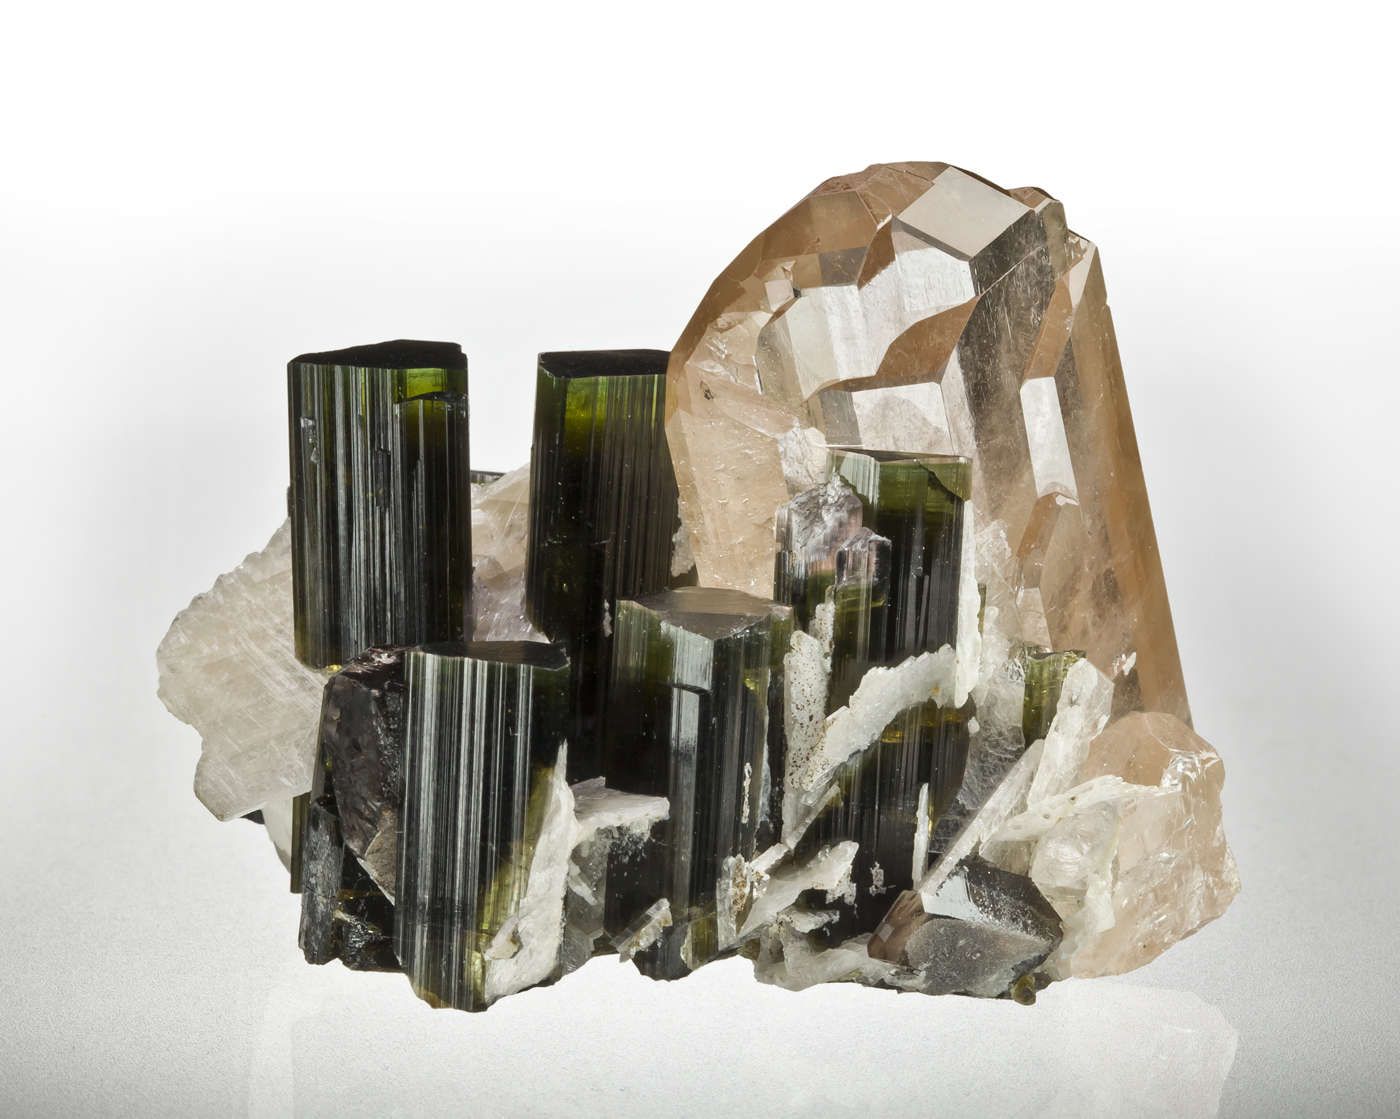 Dalas 61g Natural Green Tourmaline Crystal Rough Stone Cluster Specimen 